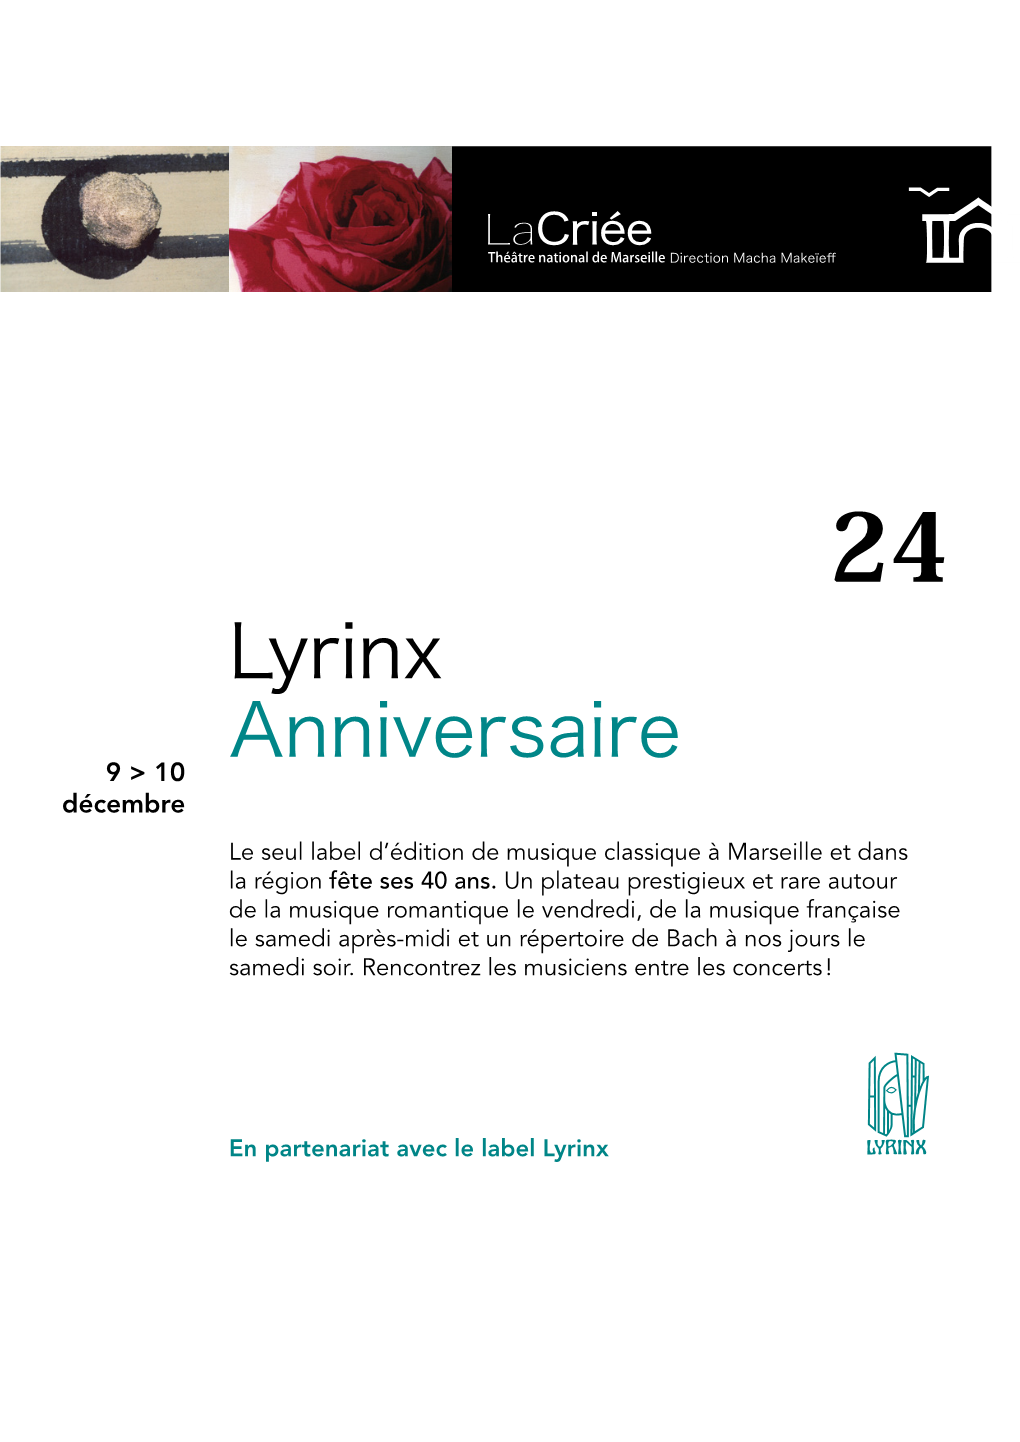 Lyrinx Anniversaire Vendredi – Grand Théâtre – 20H (Tarif B De 9 À 25 €) Samedi – Grand Théâtre – 17H (Tarif a De 6 À 13 €) Et 20H (Tarif B)